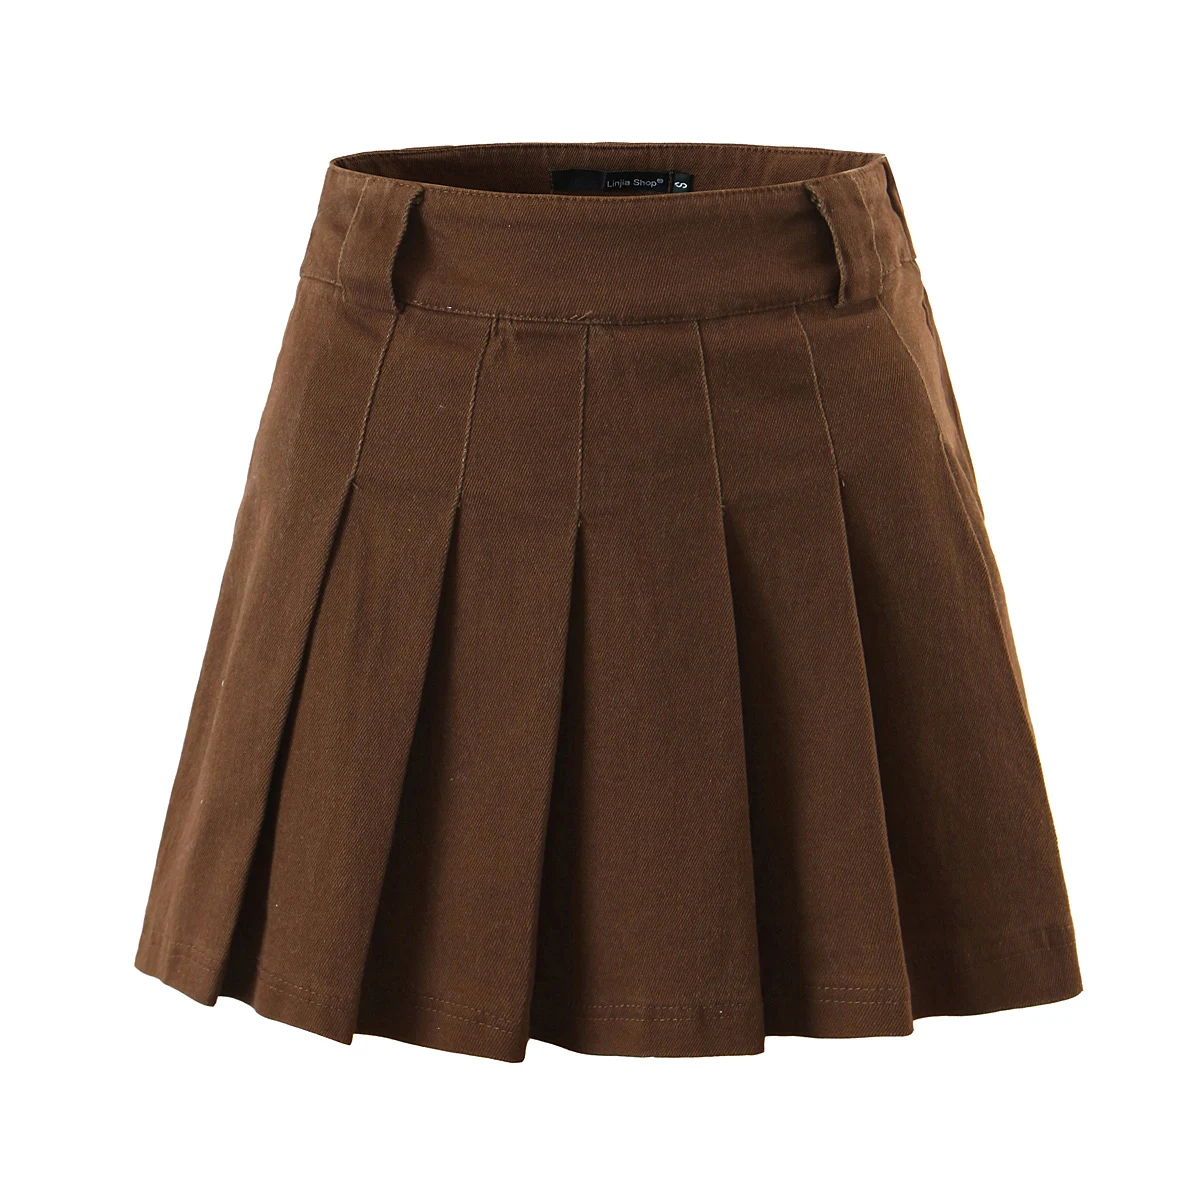 

Super mini skirt sexy korean style skirts womens 2022 Summer high waisted skirt for women vintage clothes harajuku skirt brown